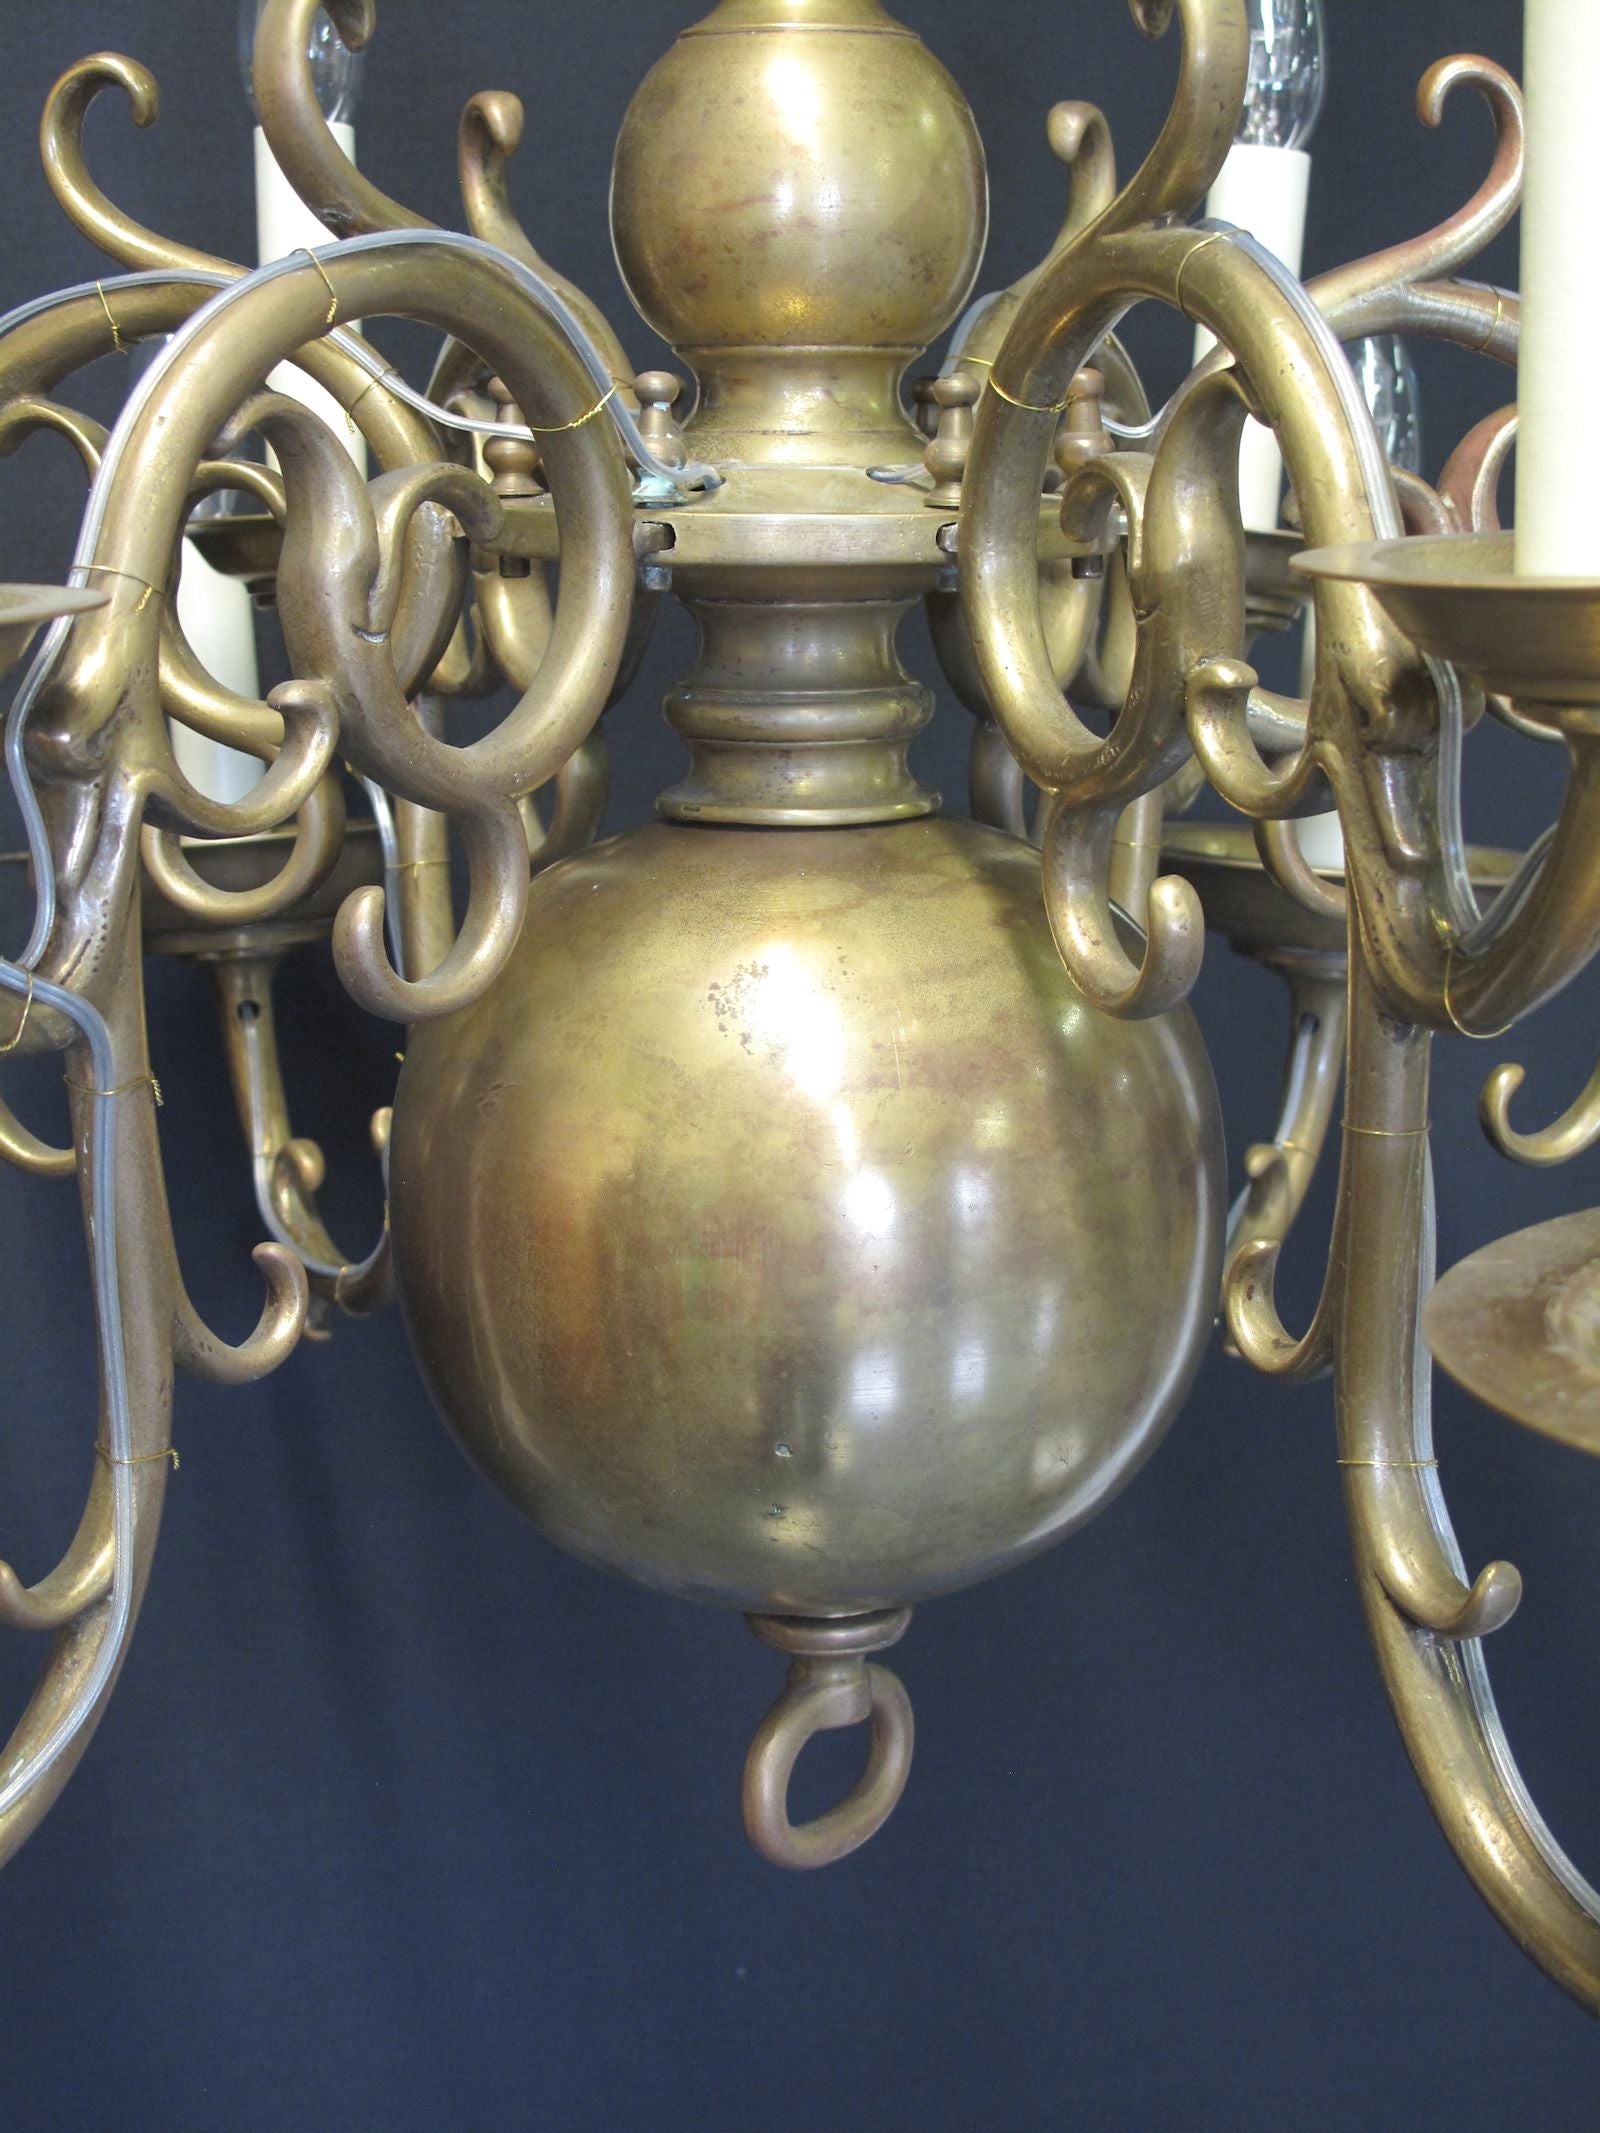 bottom ball of chandelier